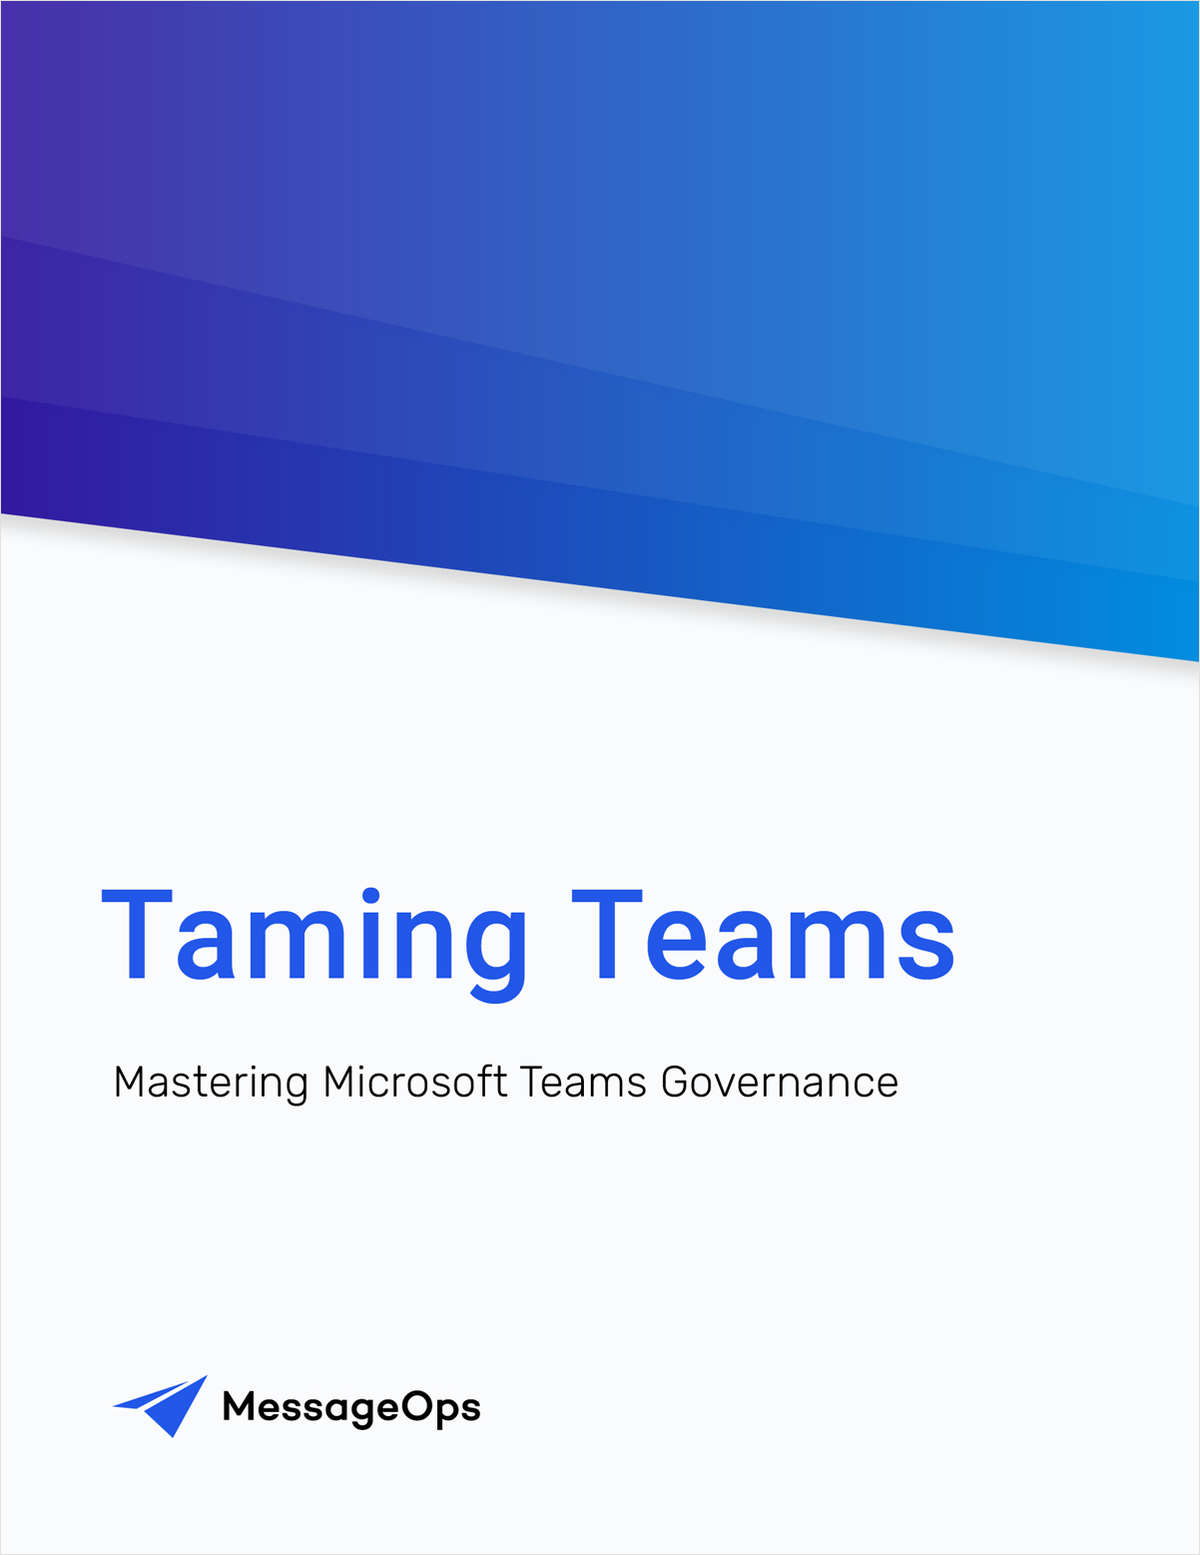 Taming Teams: Mastering Microsoft Teams Governance